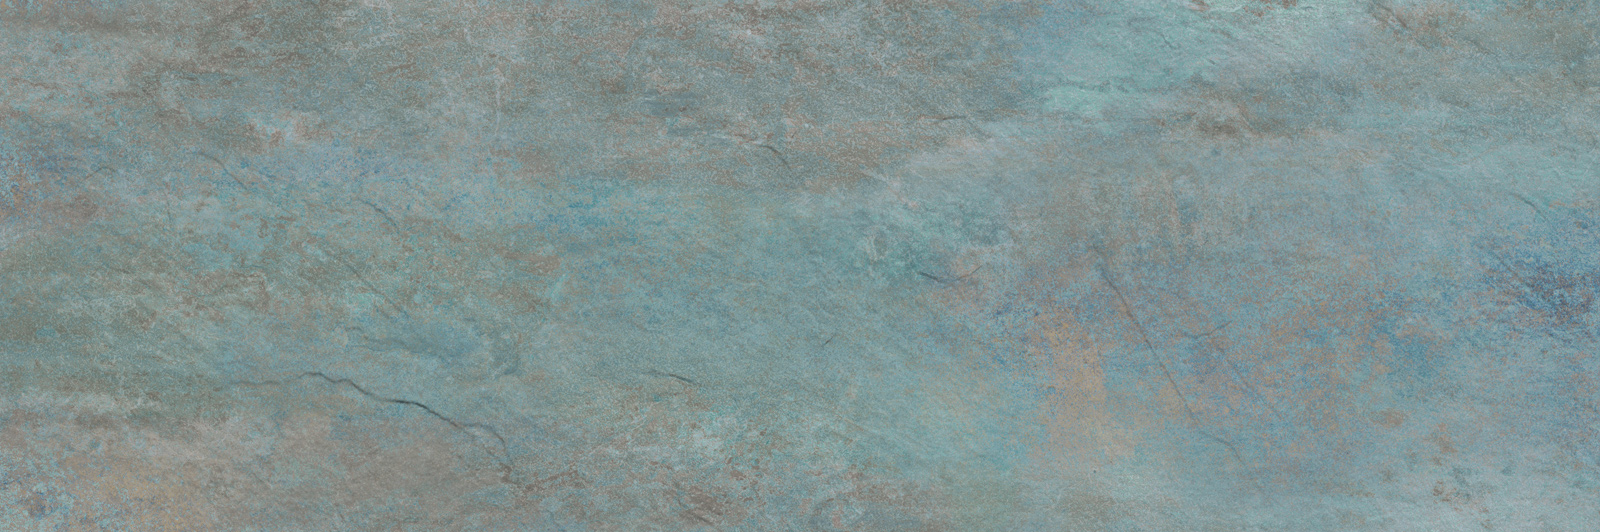 Настенная плитка Delacora Bryston Lagoon Sugar-эффект 24,6x74 настенная плитка delacora delta marmo wt15dla25r 24 6x74